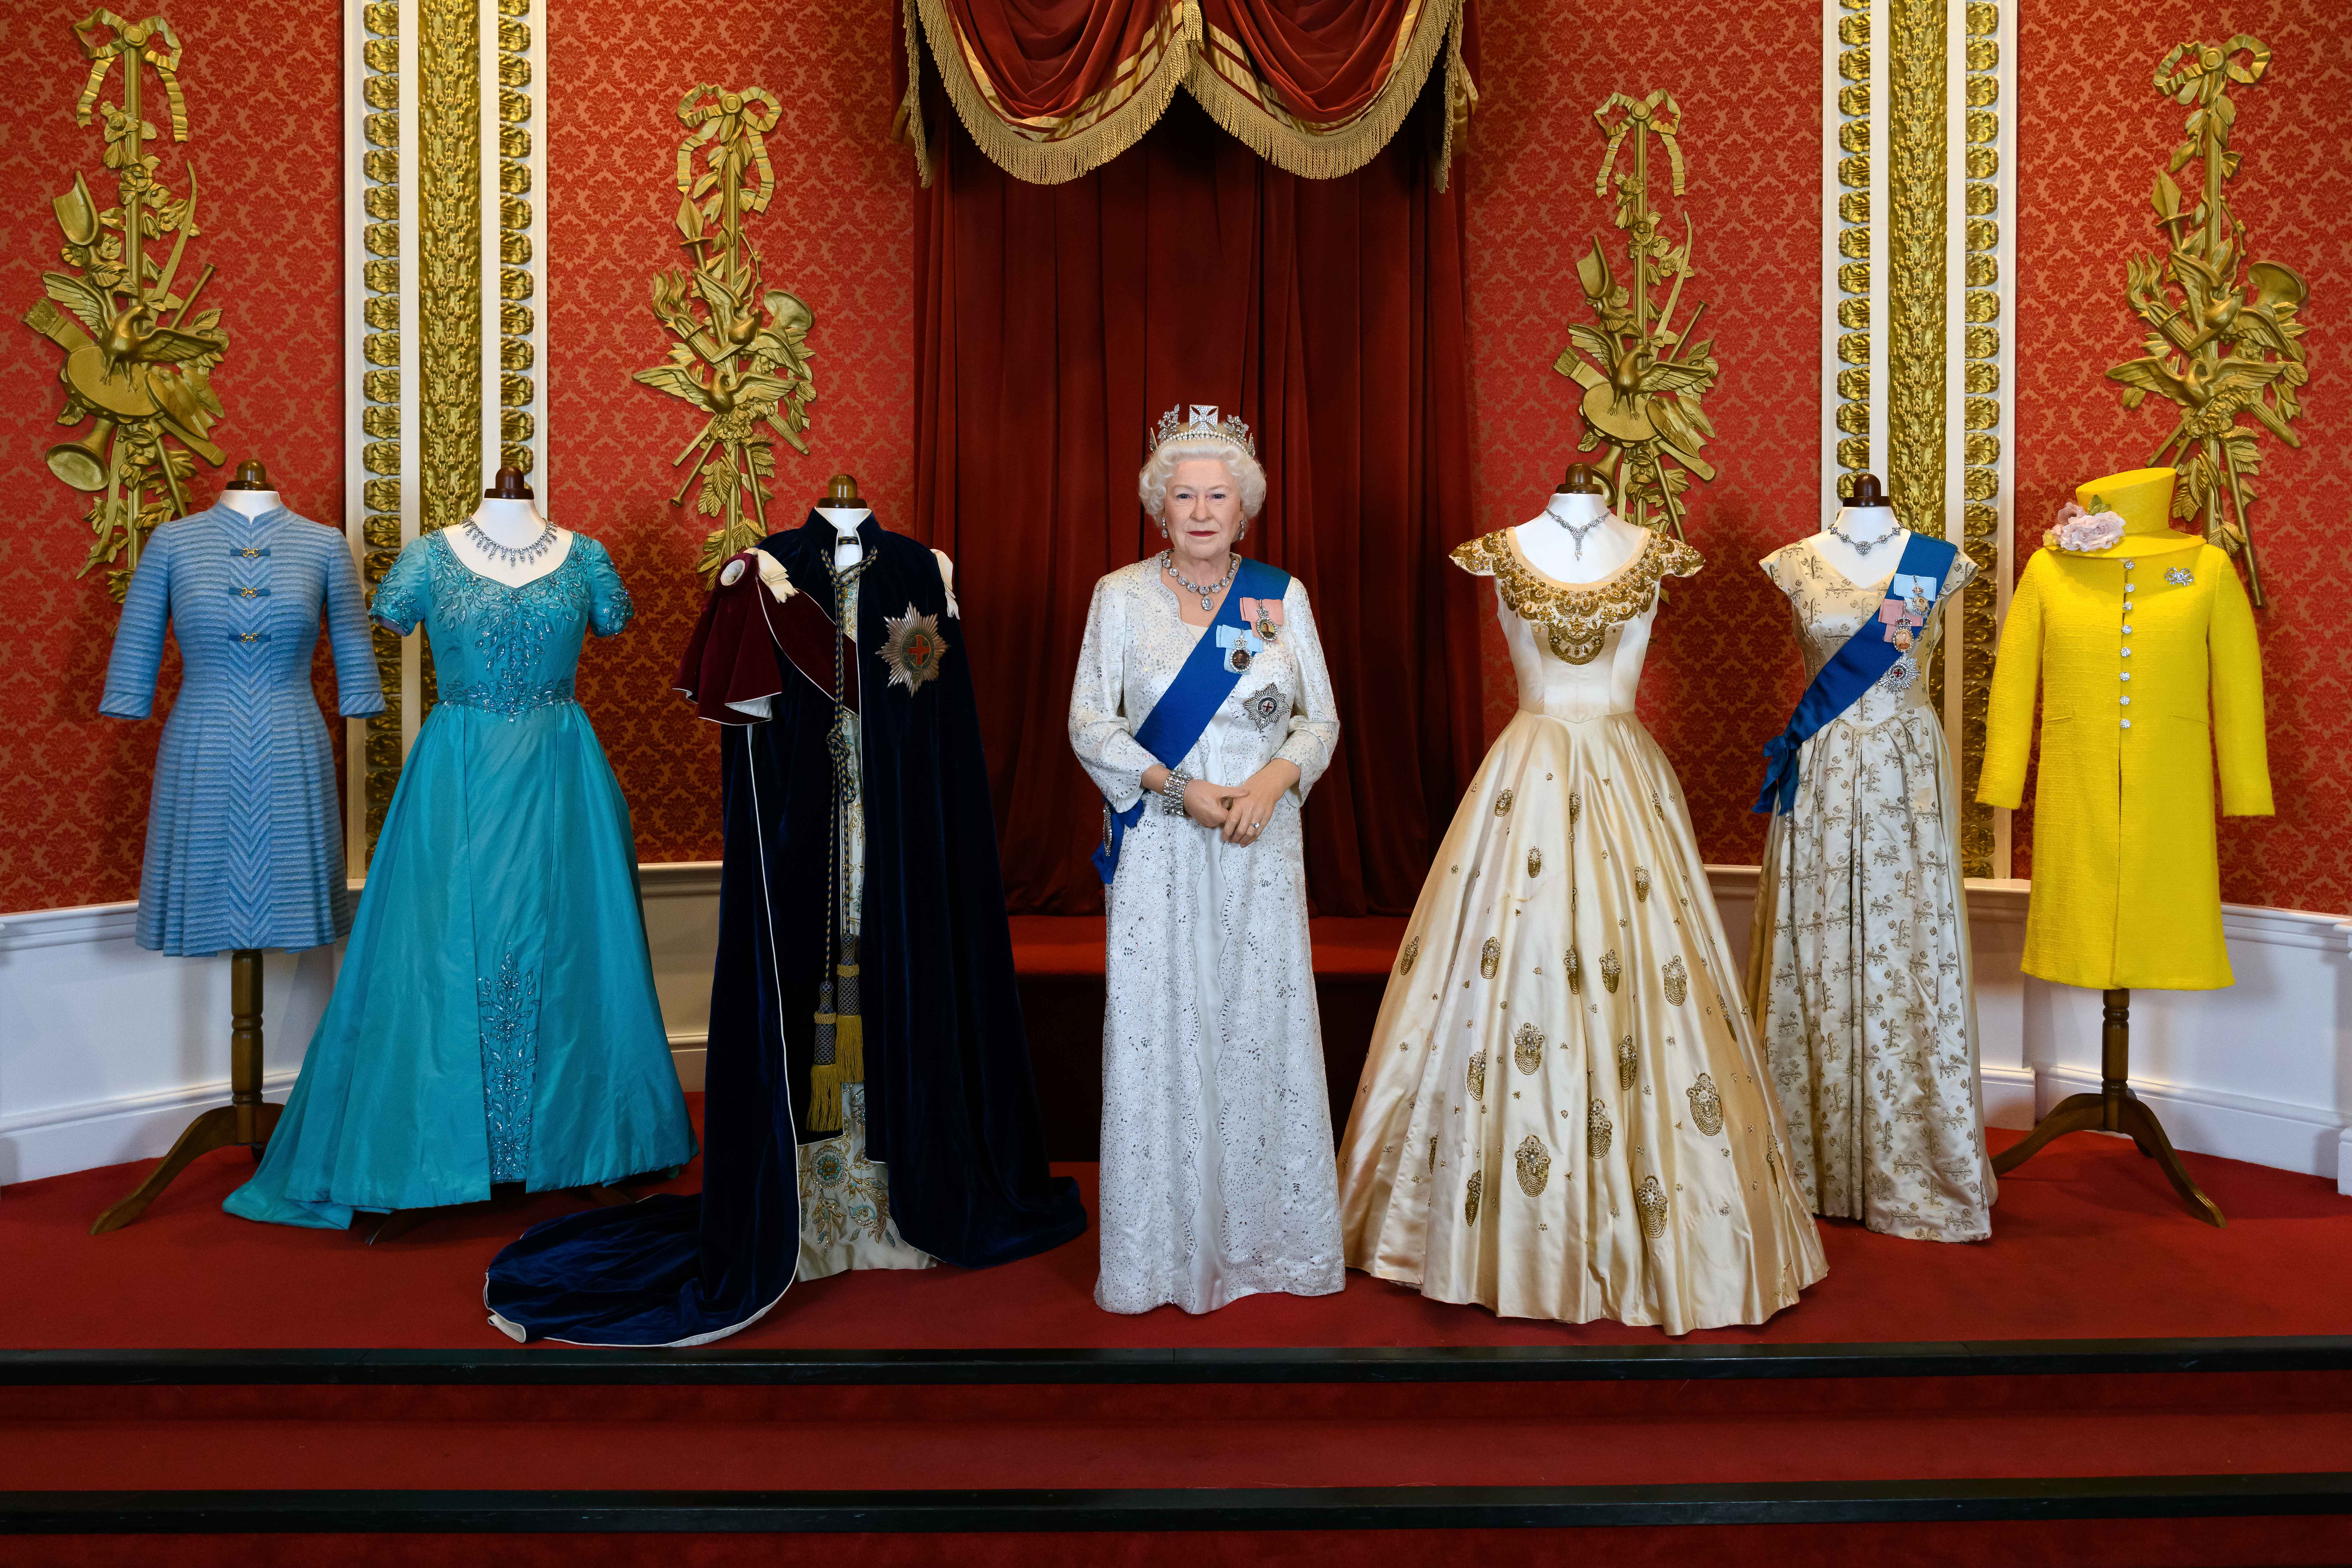 Madame Tussauds' Royal Dress Collection